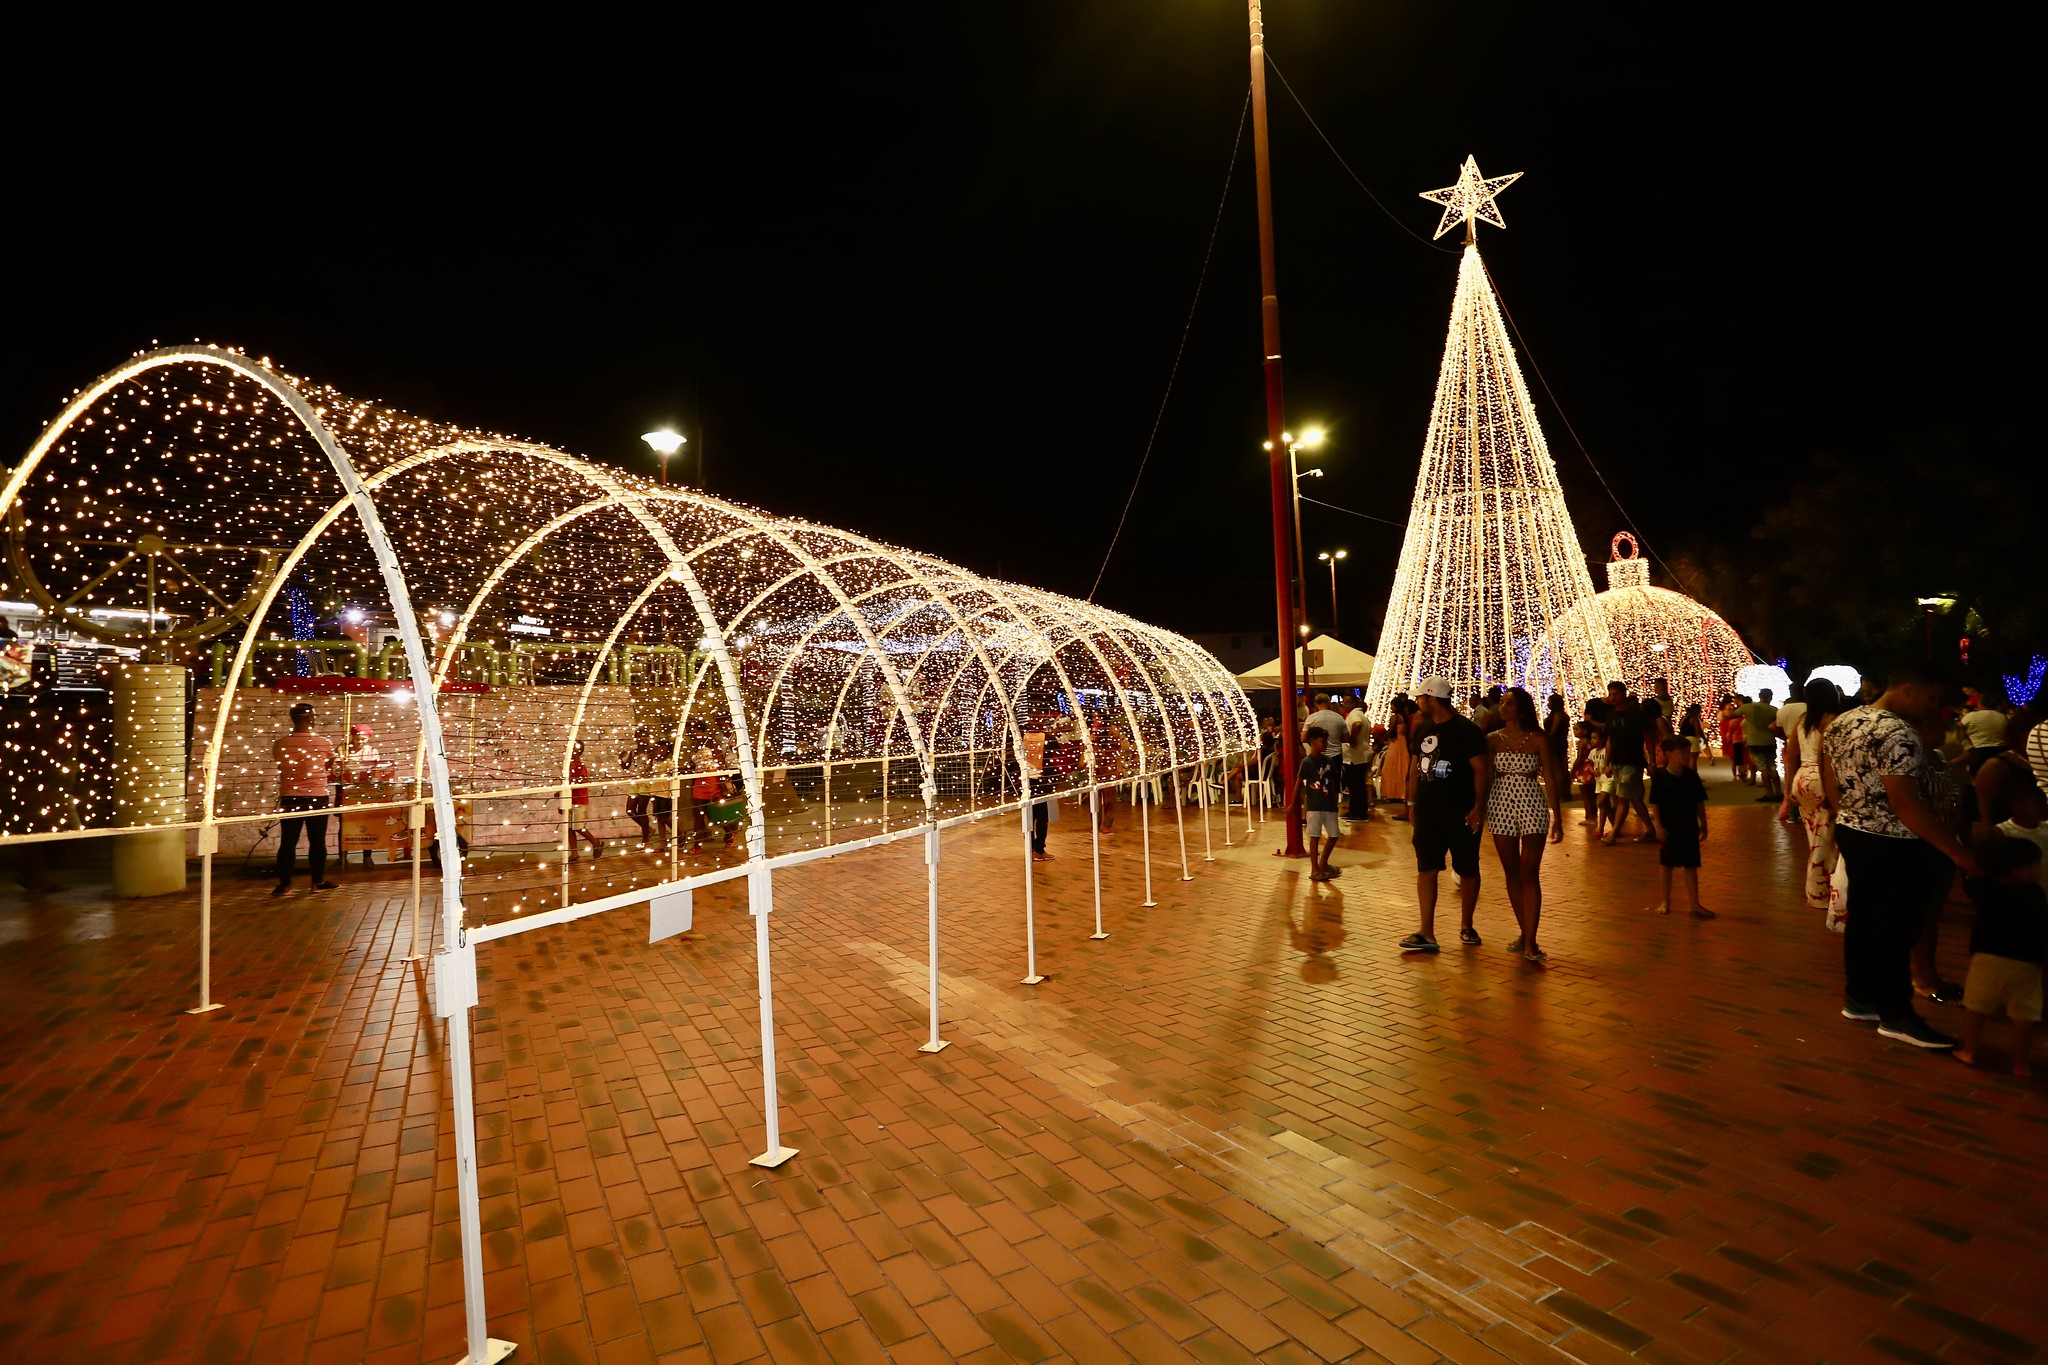 Inaugurao das 'Luzes de Natal' encanta e emociona o pblico do Centro de Lauro de Freitas